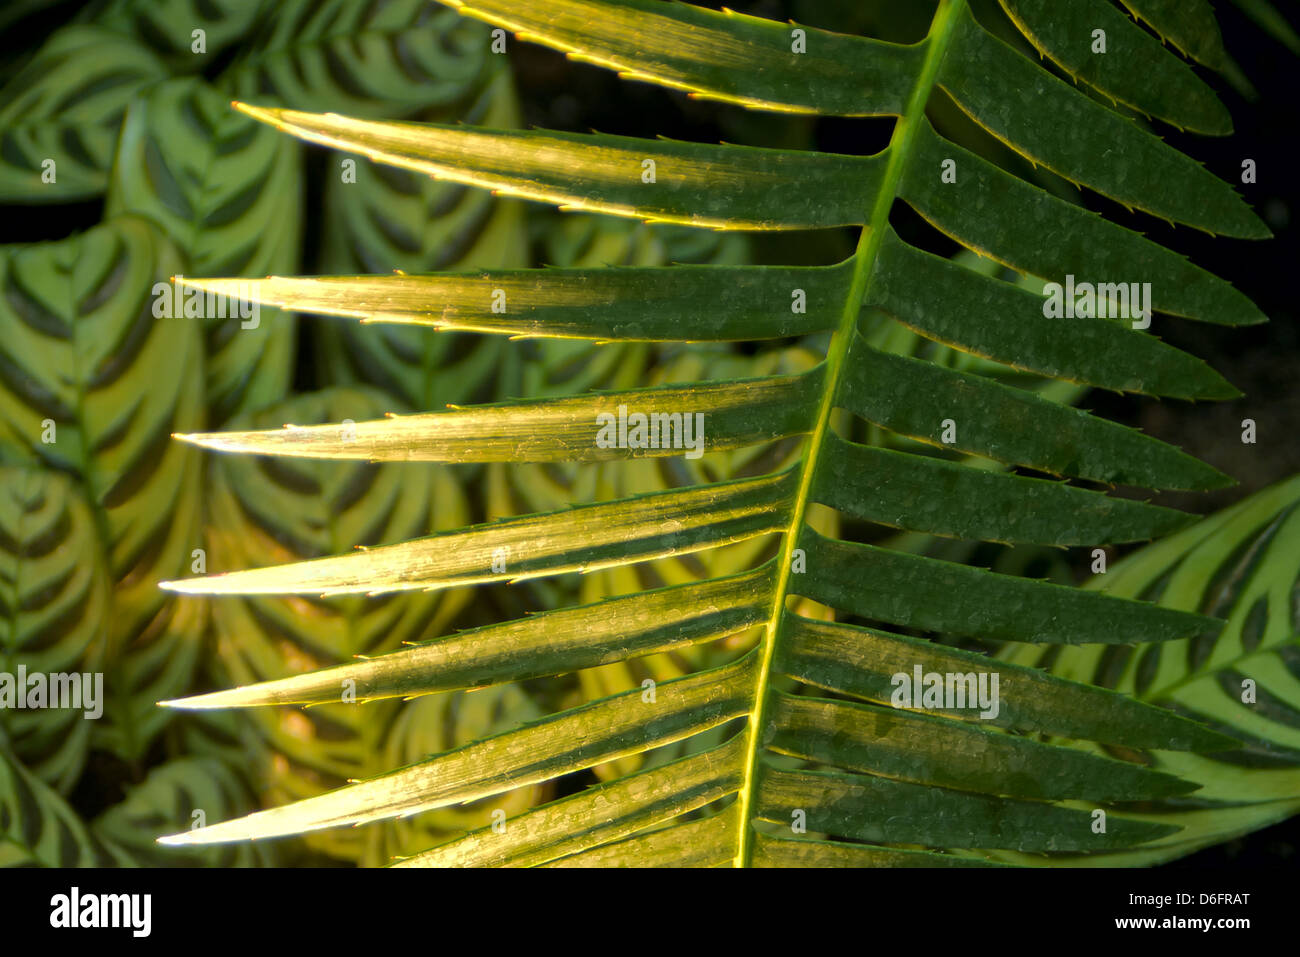 Palm frond and prayer plants or marantas Stock Photo